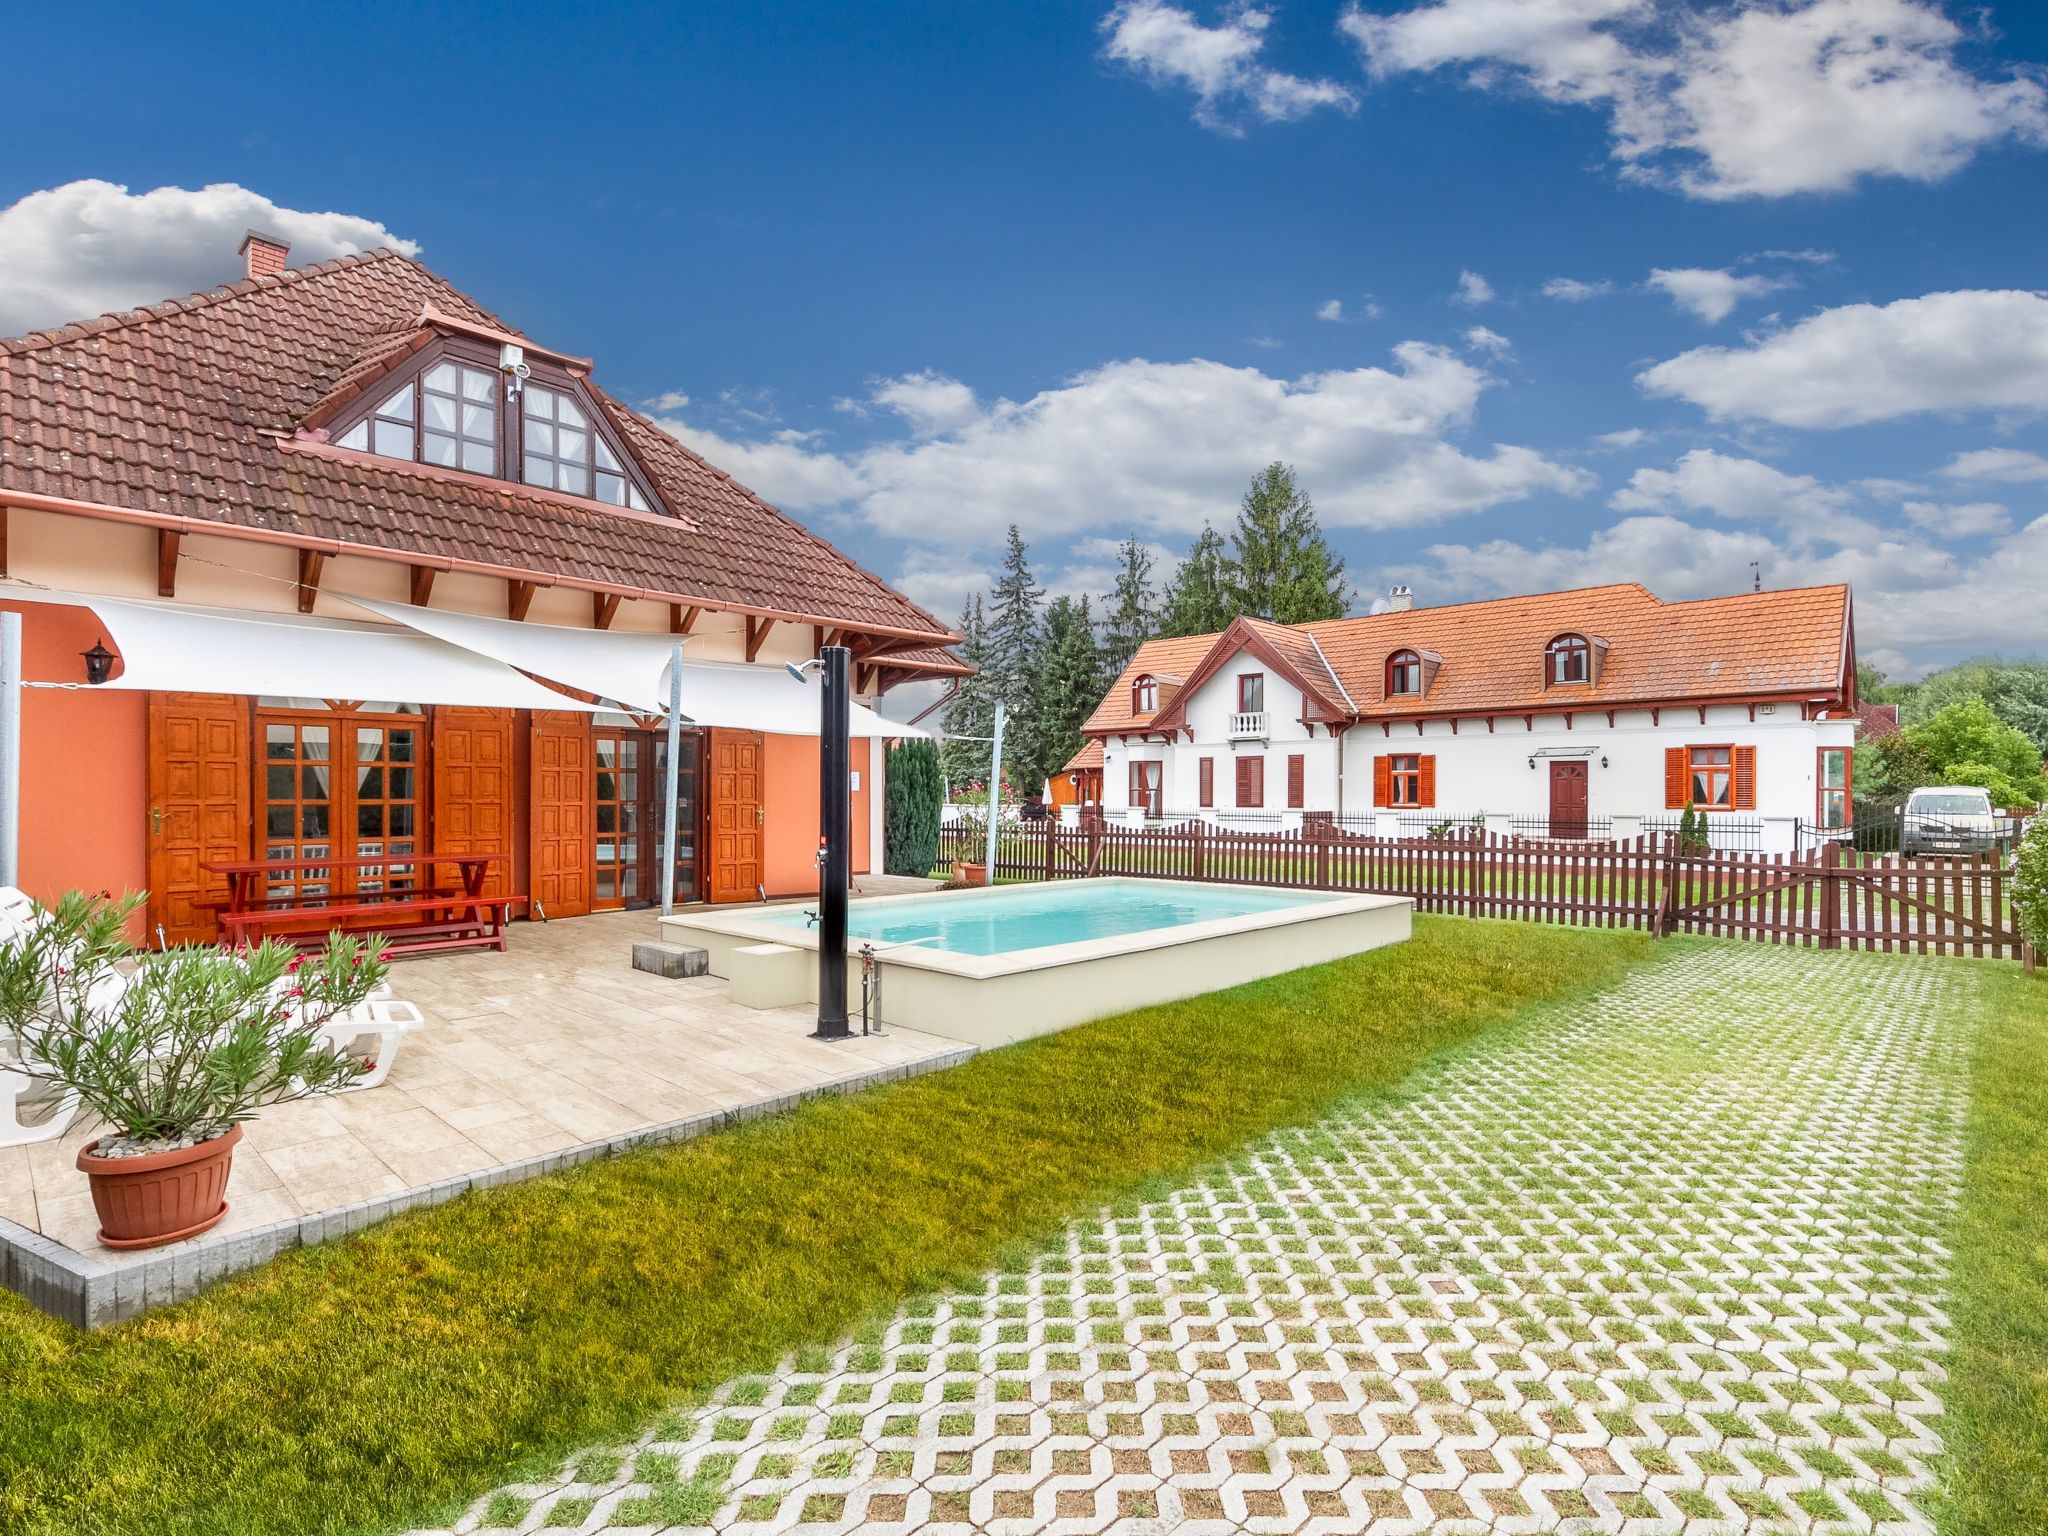 Foto 13 - Casa con 4 camere da letto a Balatonberény con piscina privata e giardino